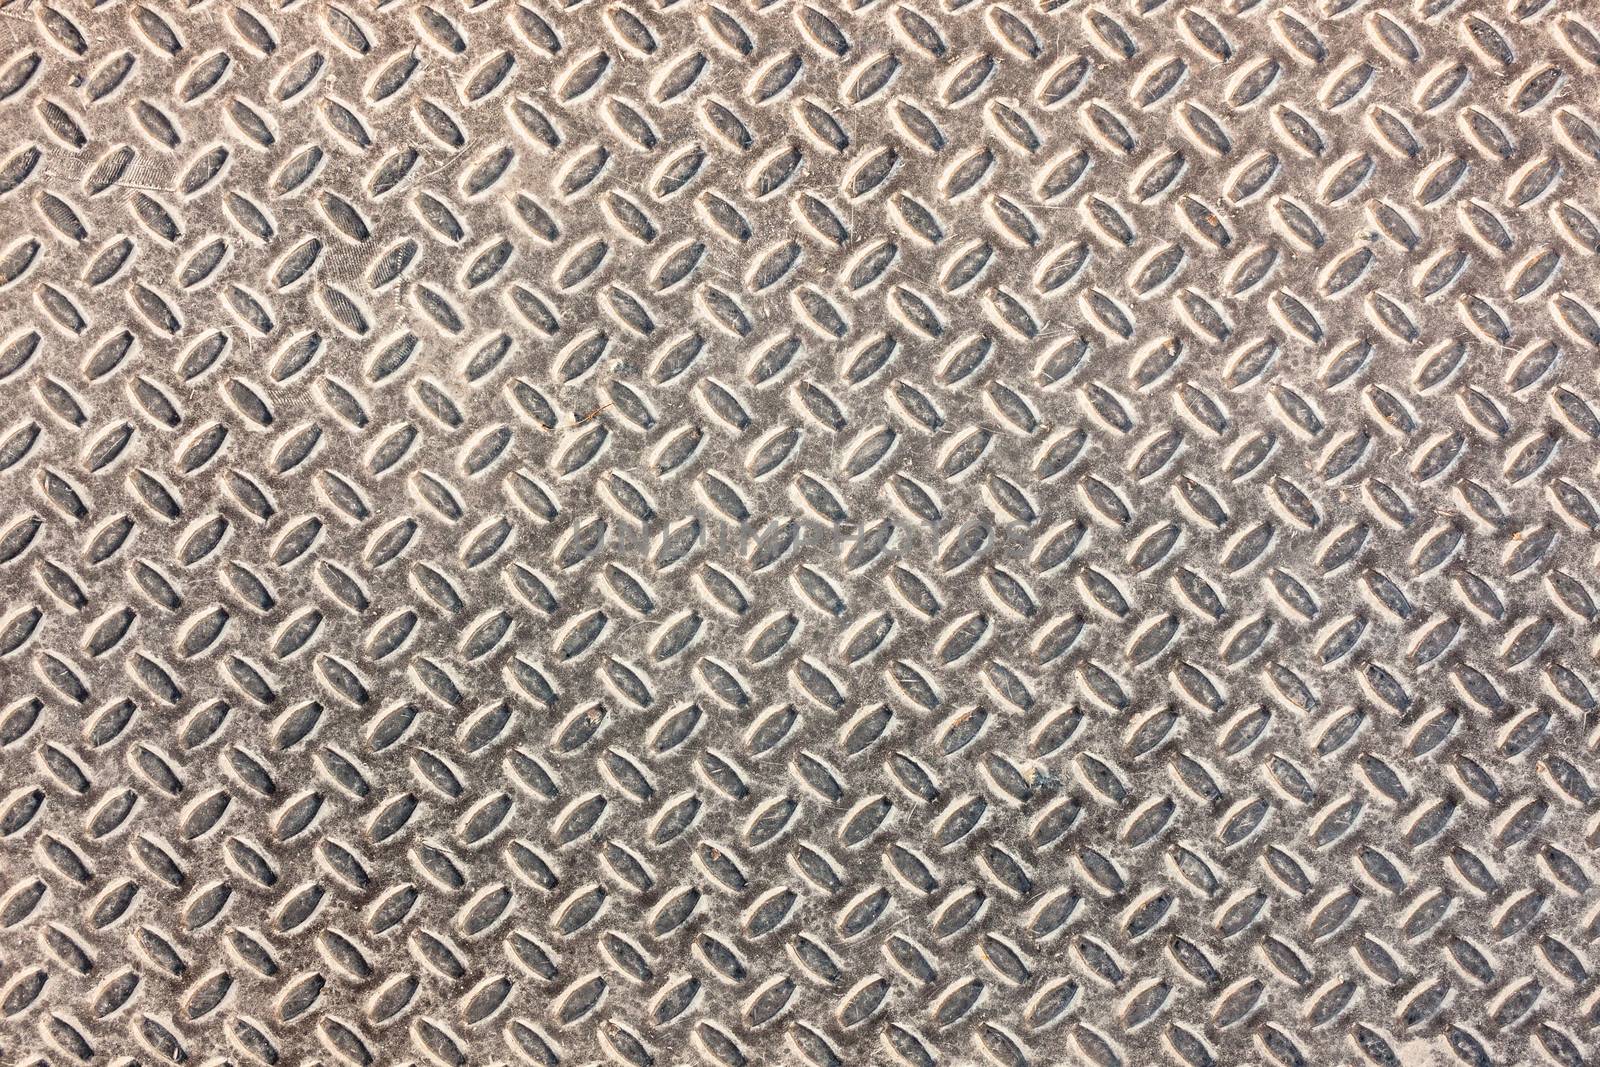 Dirty industrial grip floor texture pattern by juhku